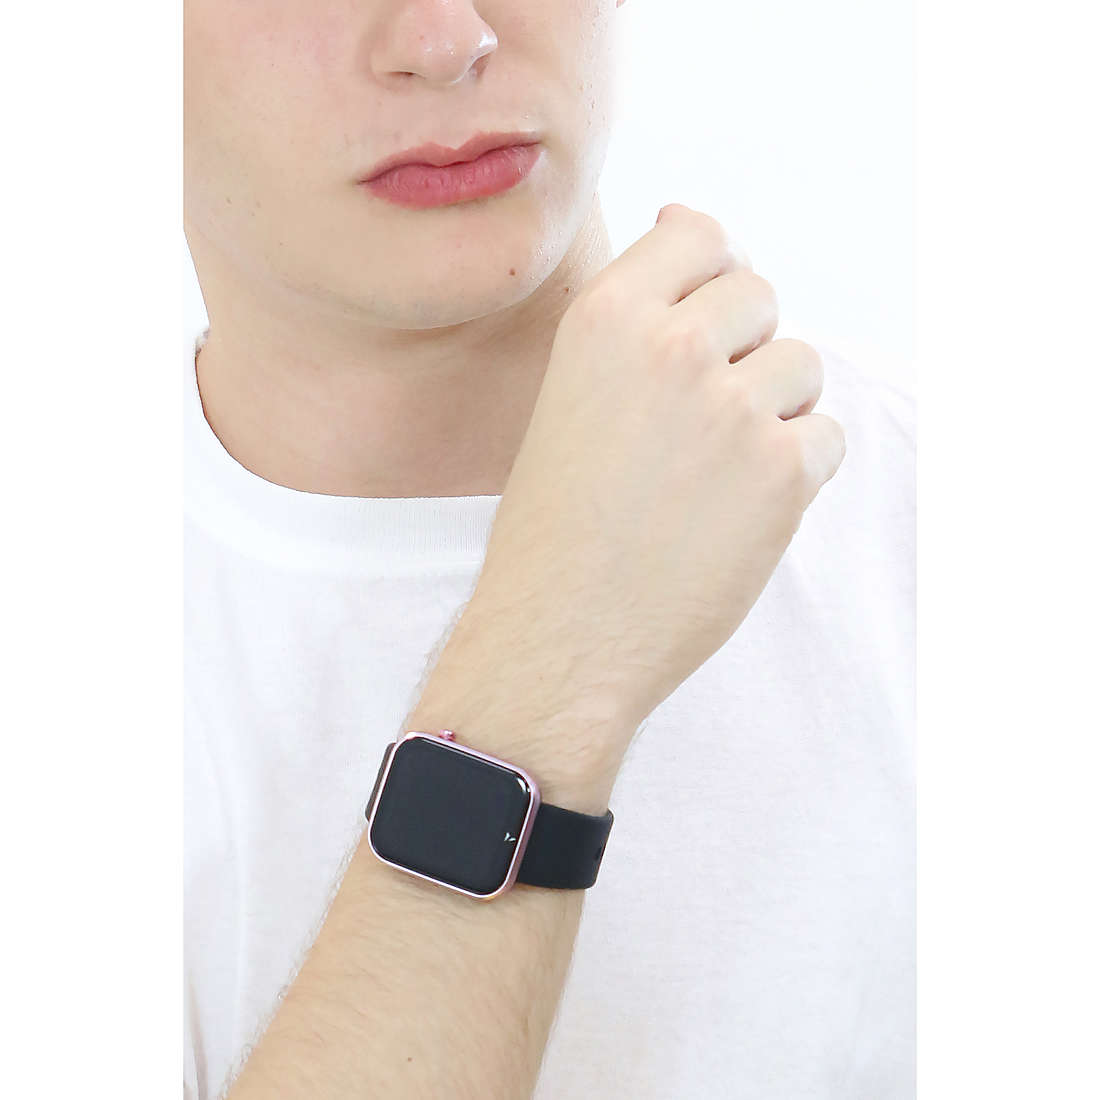 Techmade Smartwatches Hava uomo TM-HAVA-BPK indosso